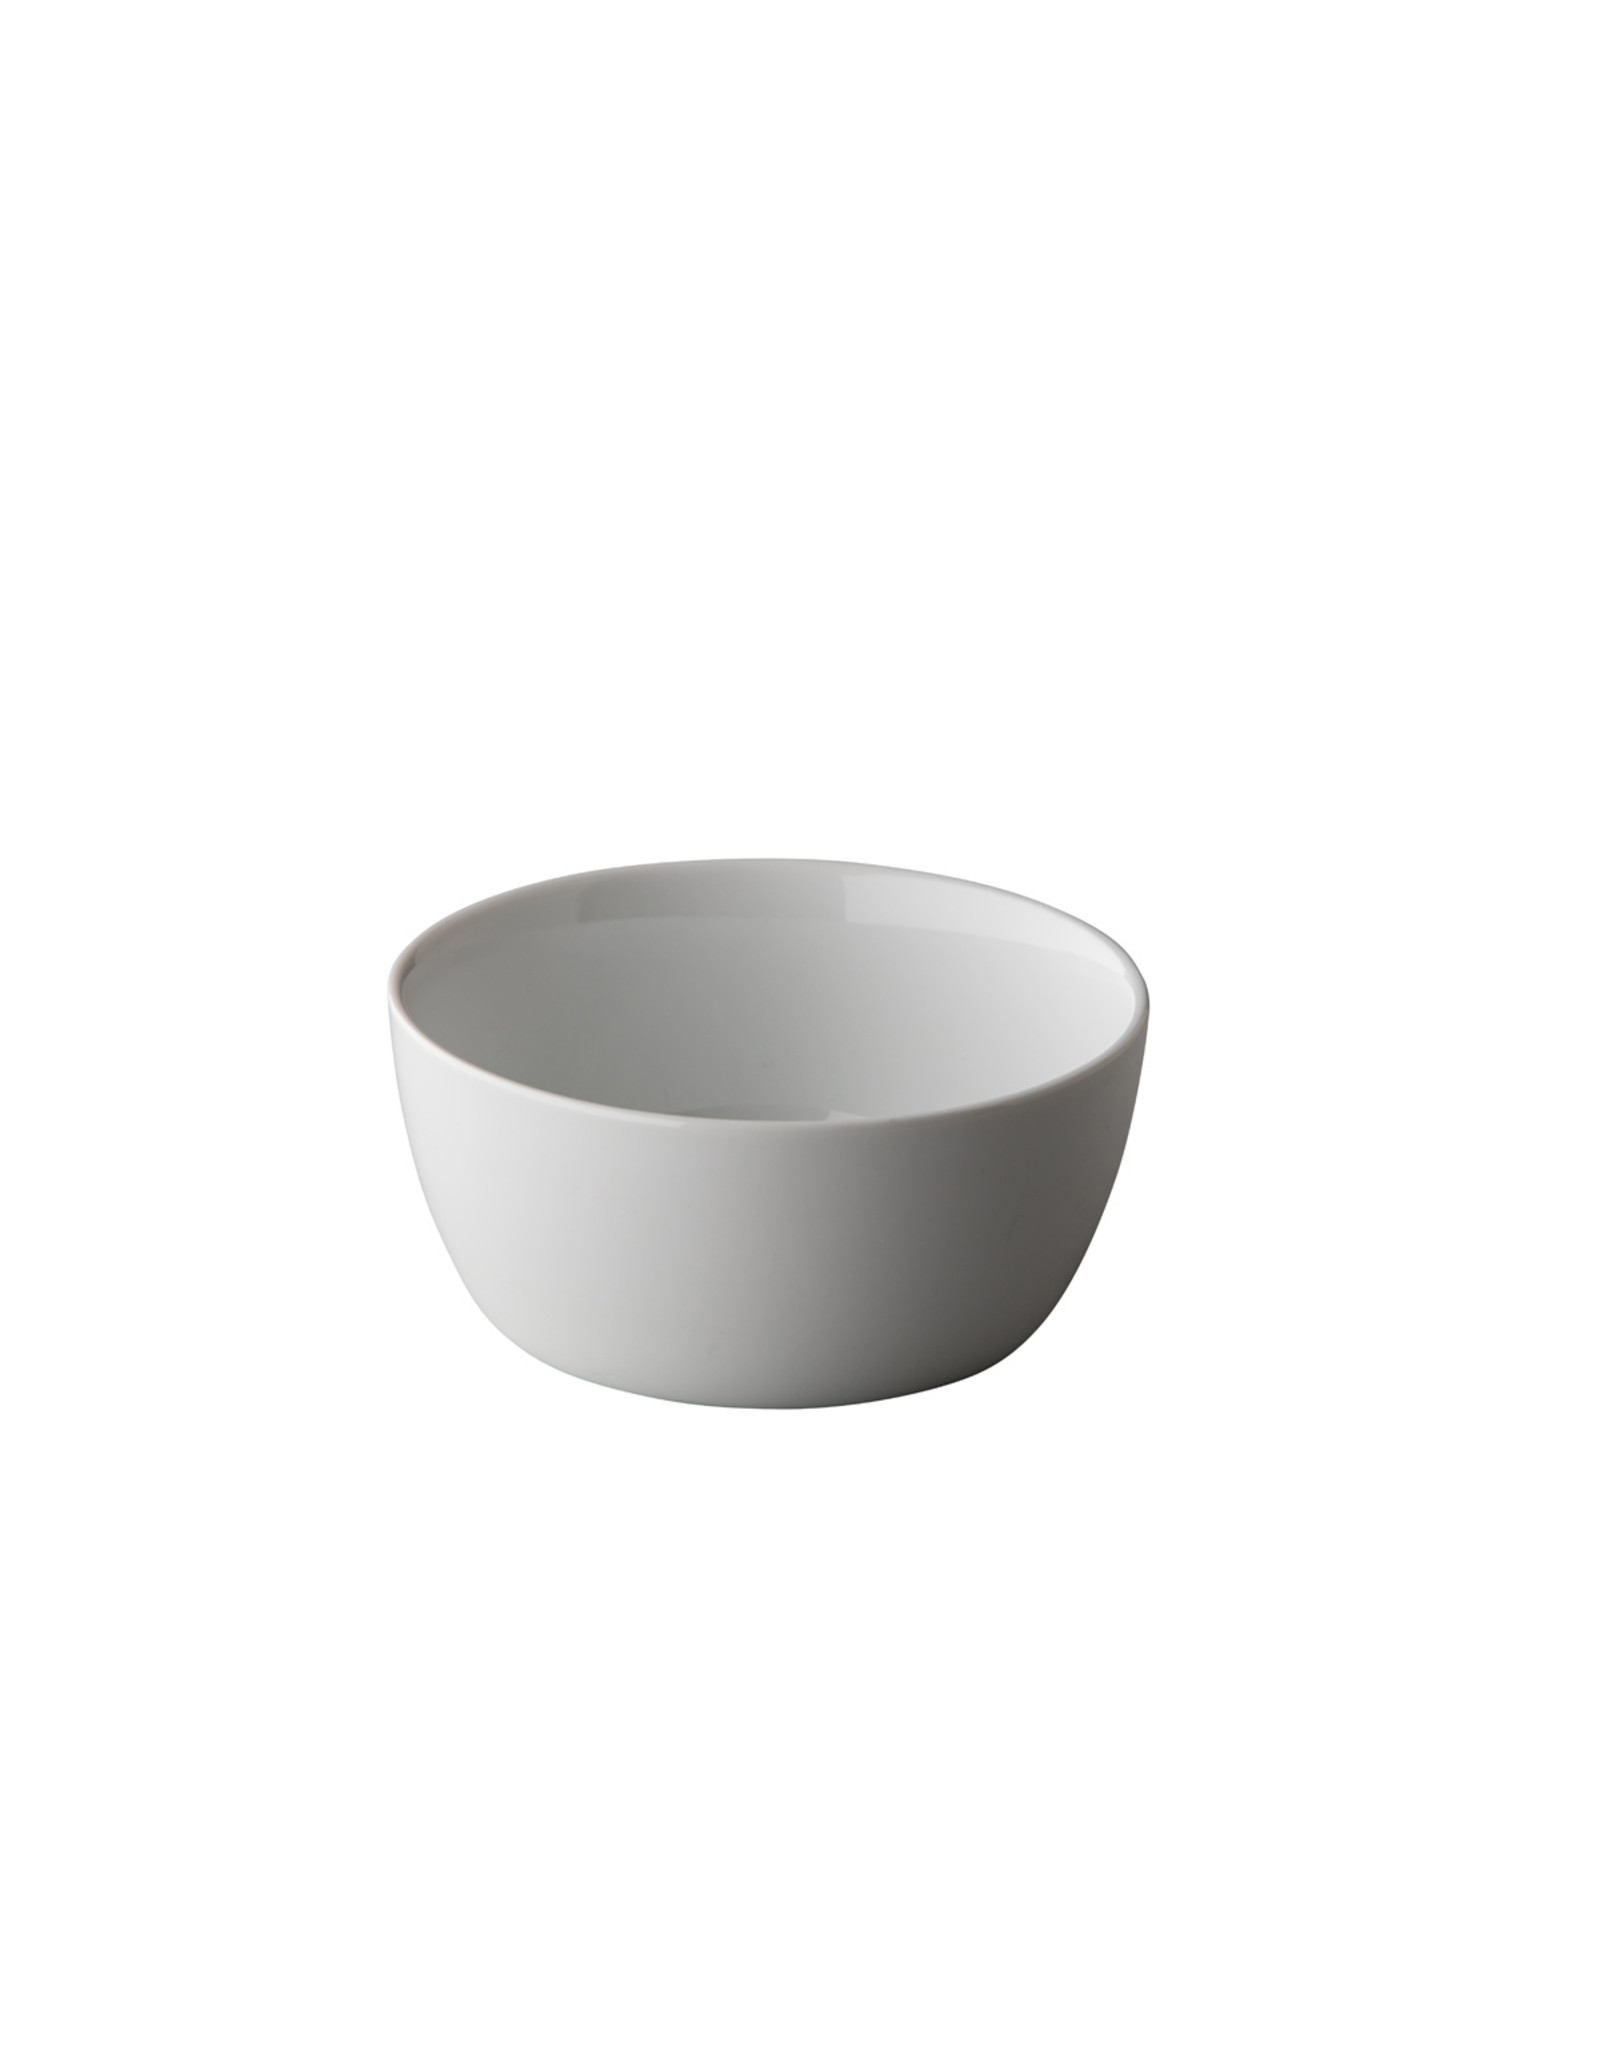 Stylepoint Q Basic Bowl 13cm (Plain Select)